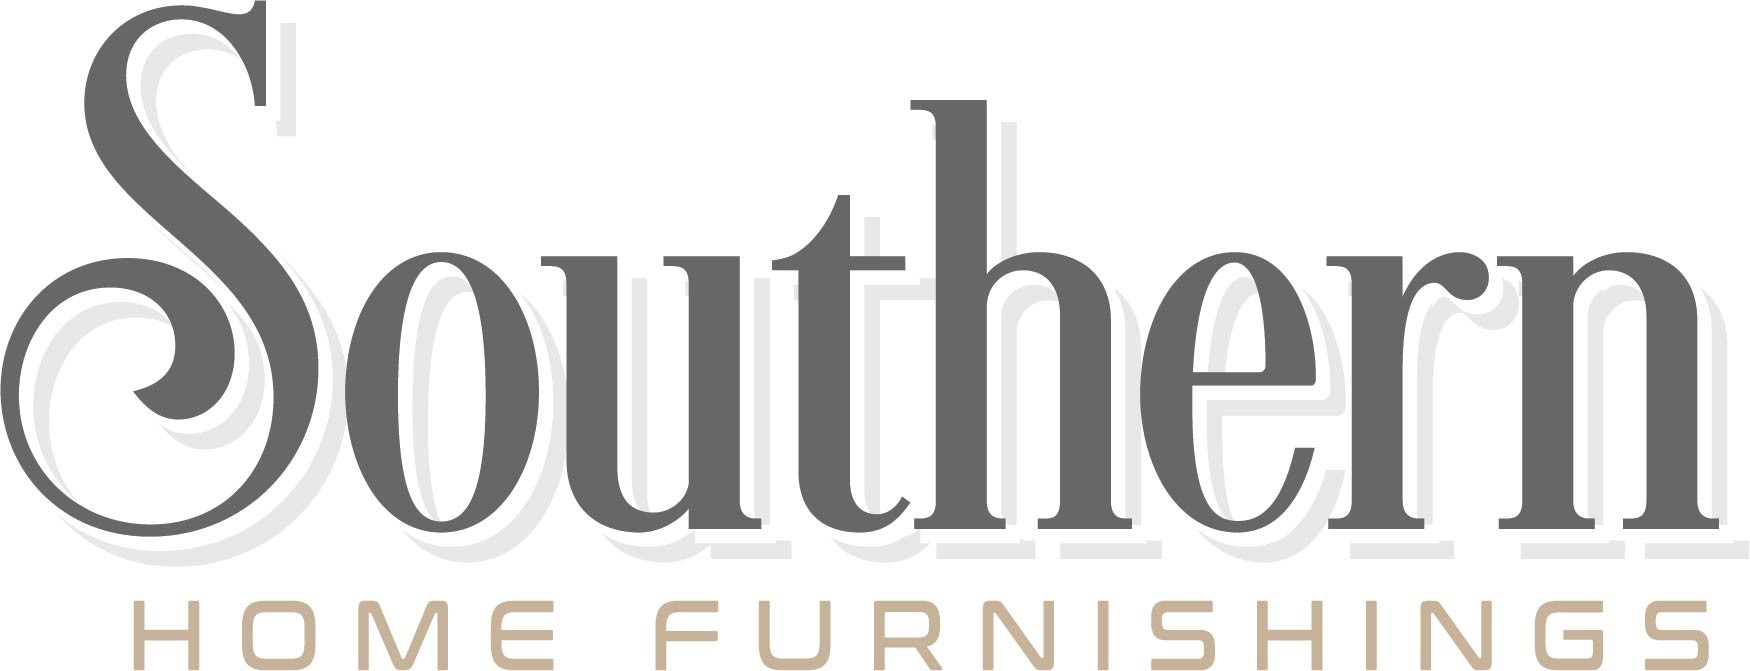 southern home furnishings logo